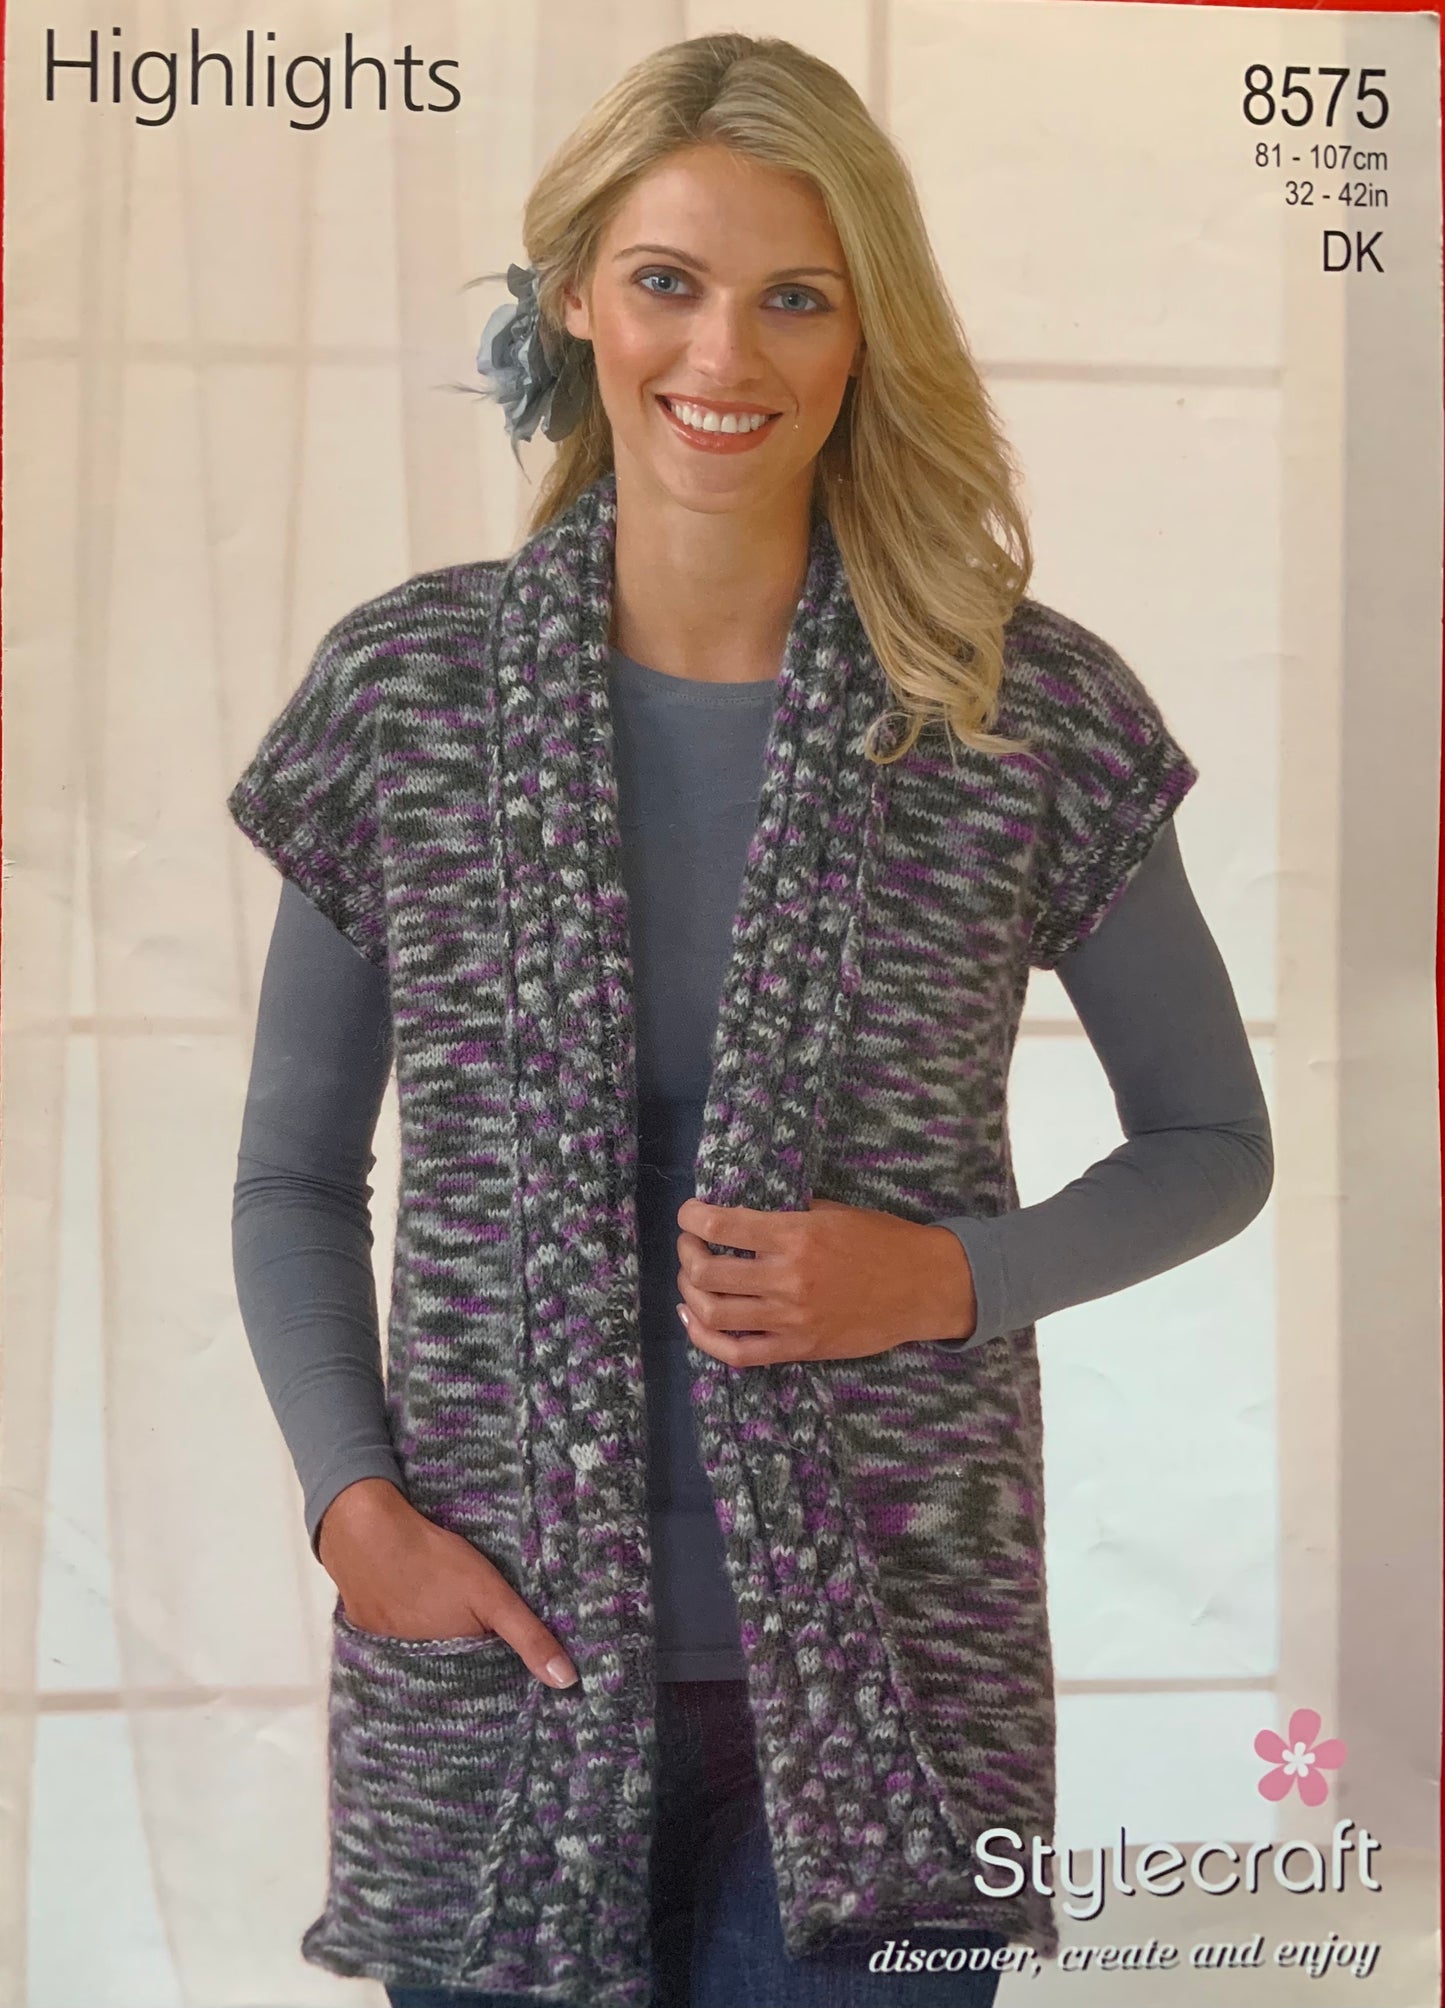 8575 Stylecraft Highlights dk ladies sleeveless jacket knitting pattern